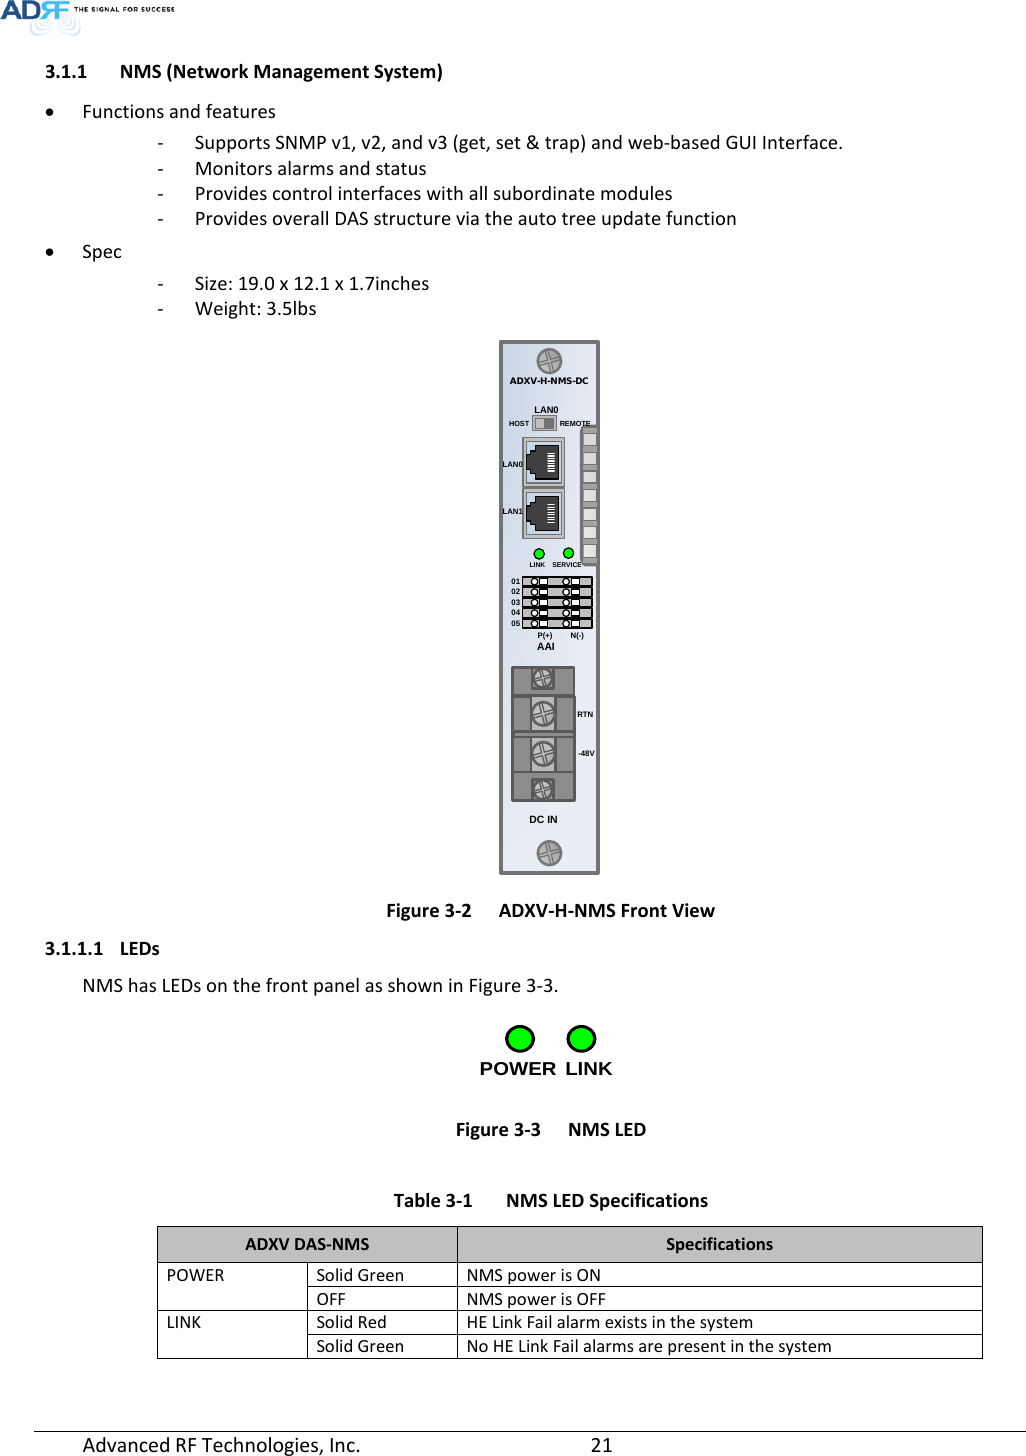 Page 21 of ADRF KOREA ADXV DAS(Distributed Antenna System) User Manual ADXV DAS